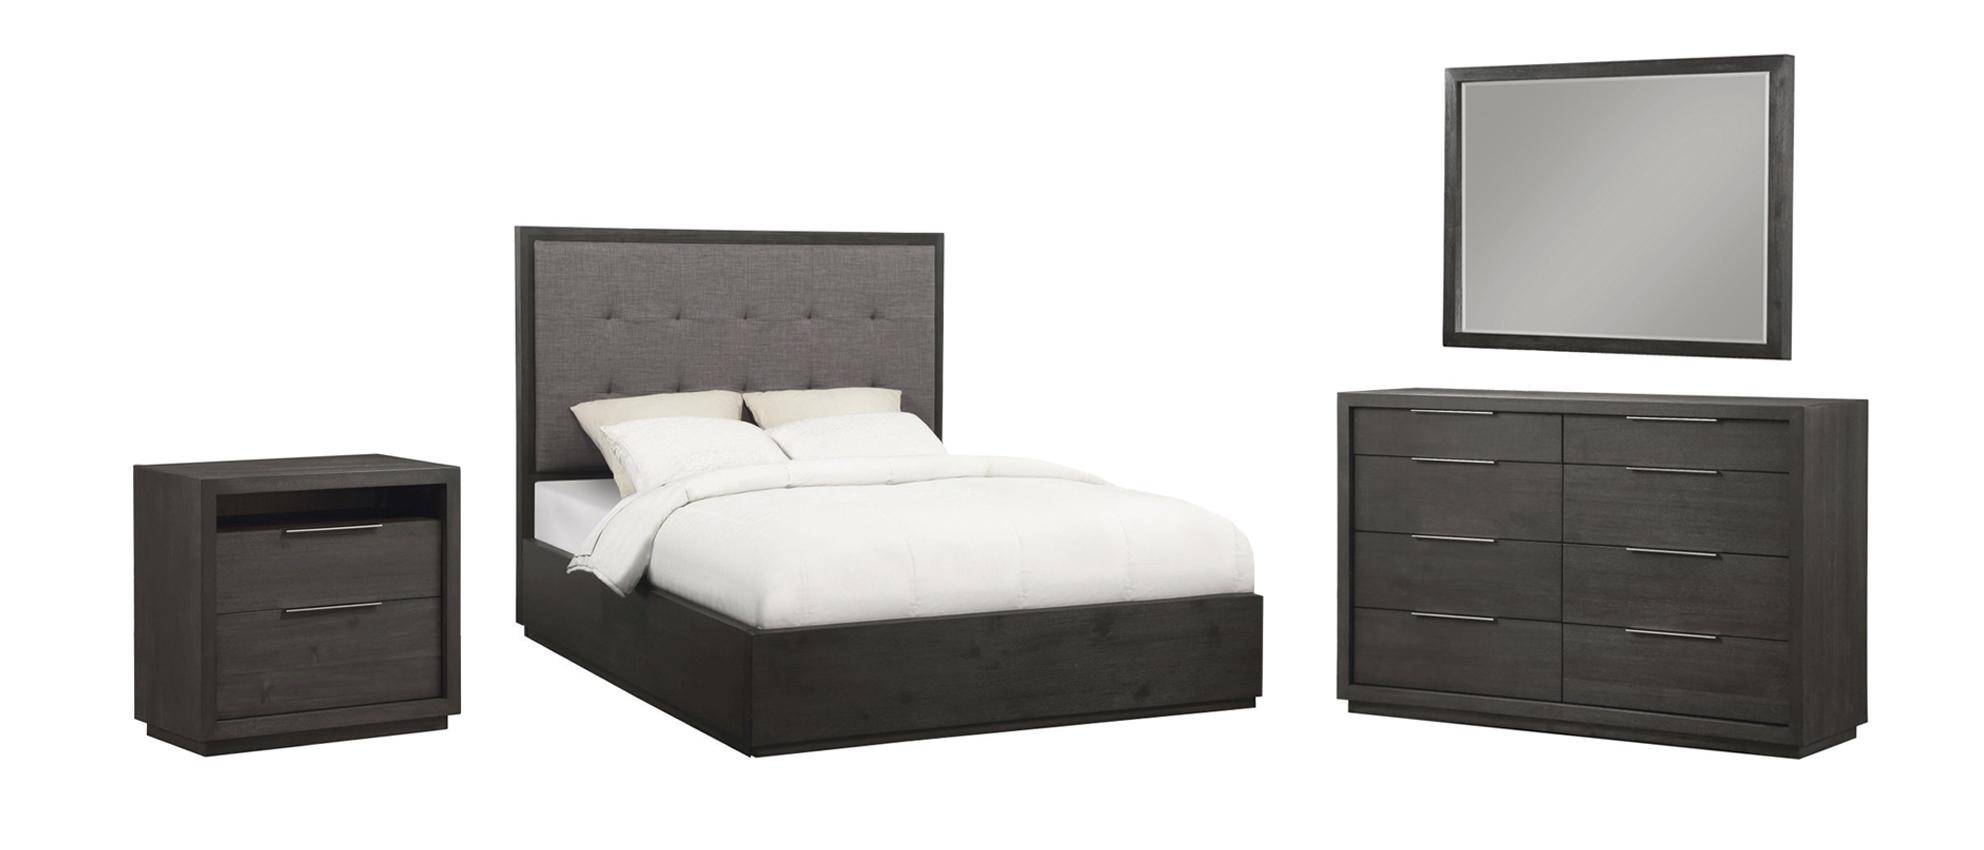 Contemporary Platform Bedroom Set OXFORD AZU5F5D-NDM-4PC in Dark Gray Fabric